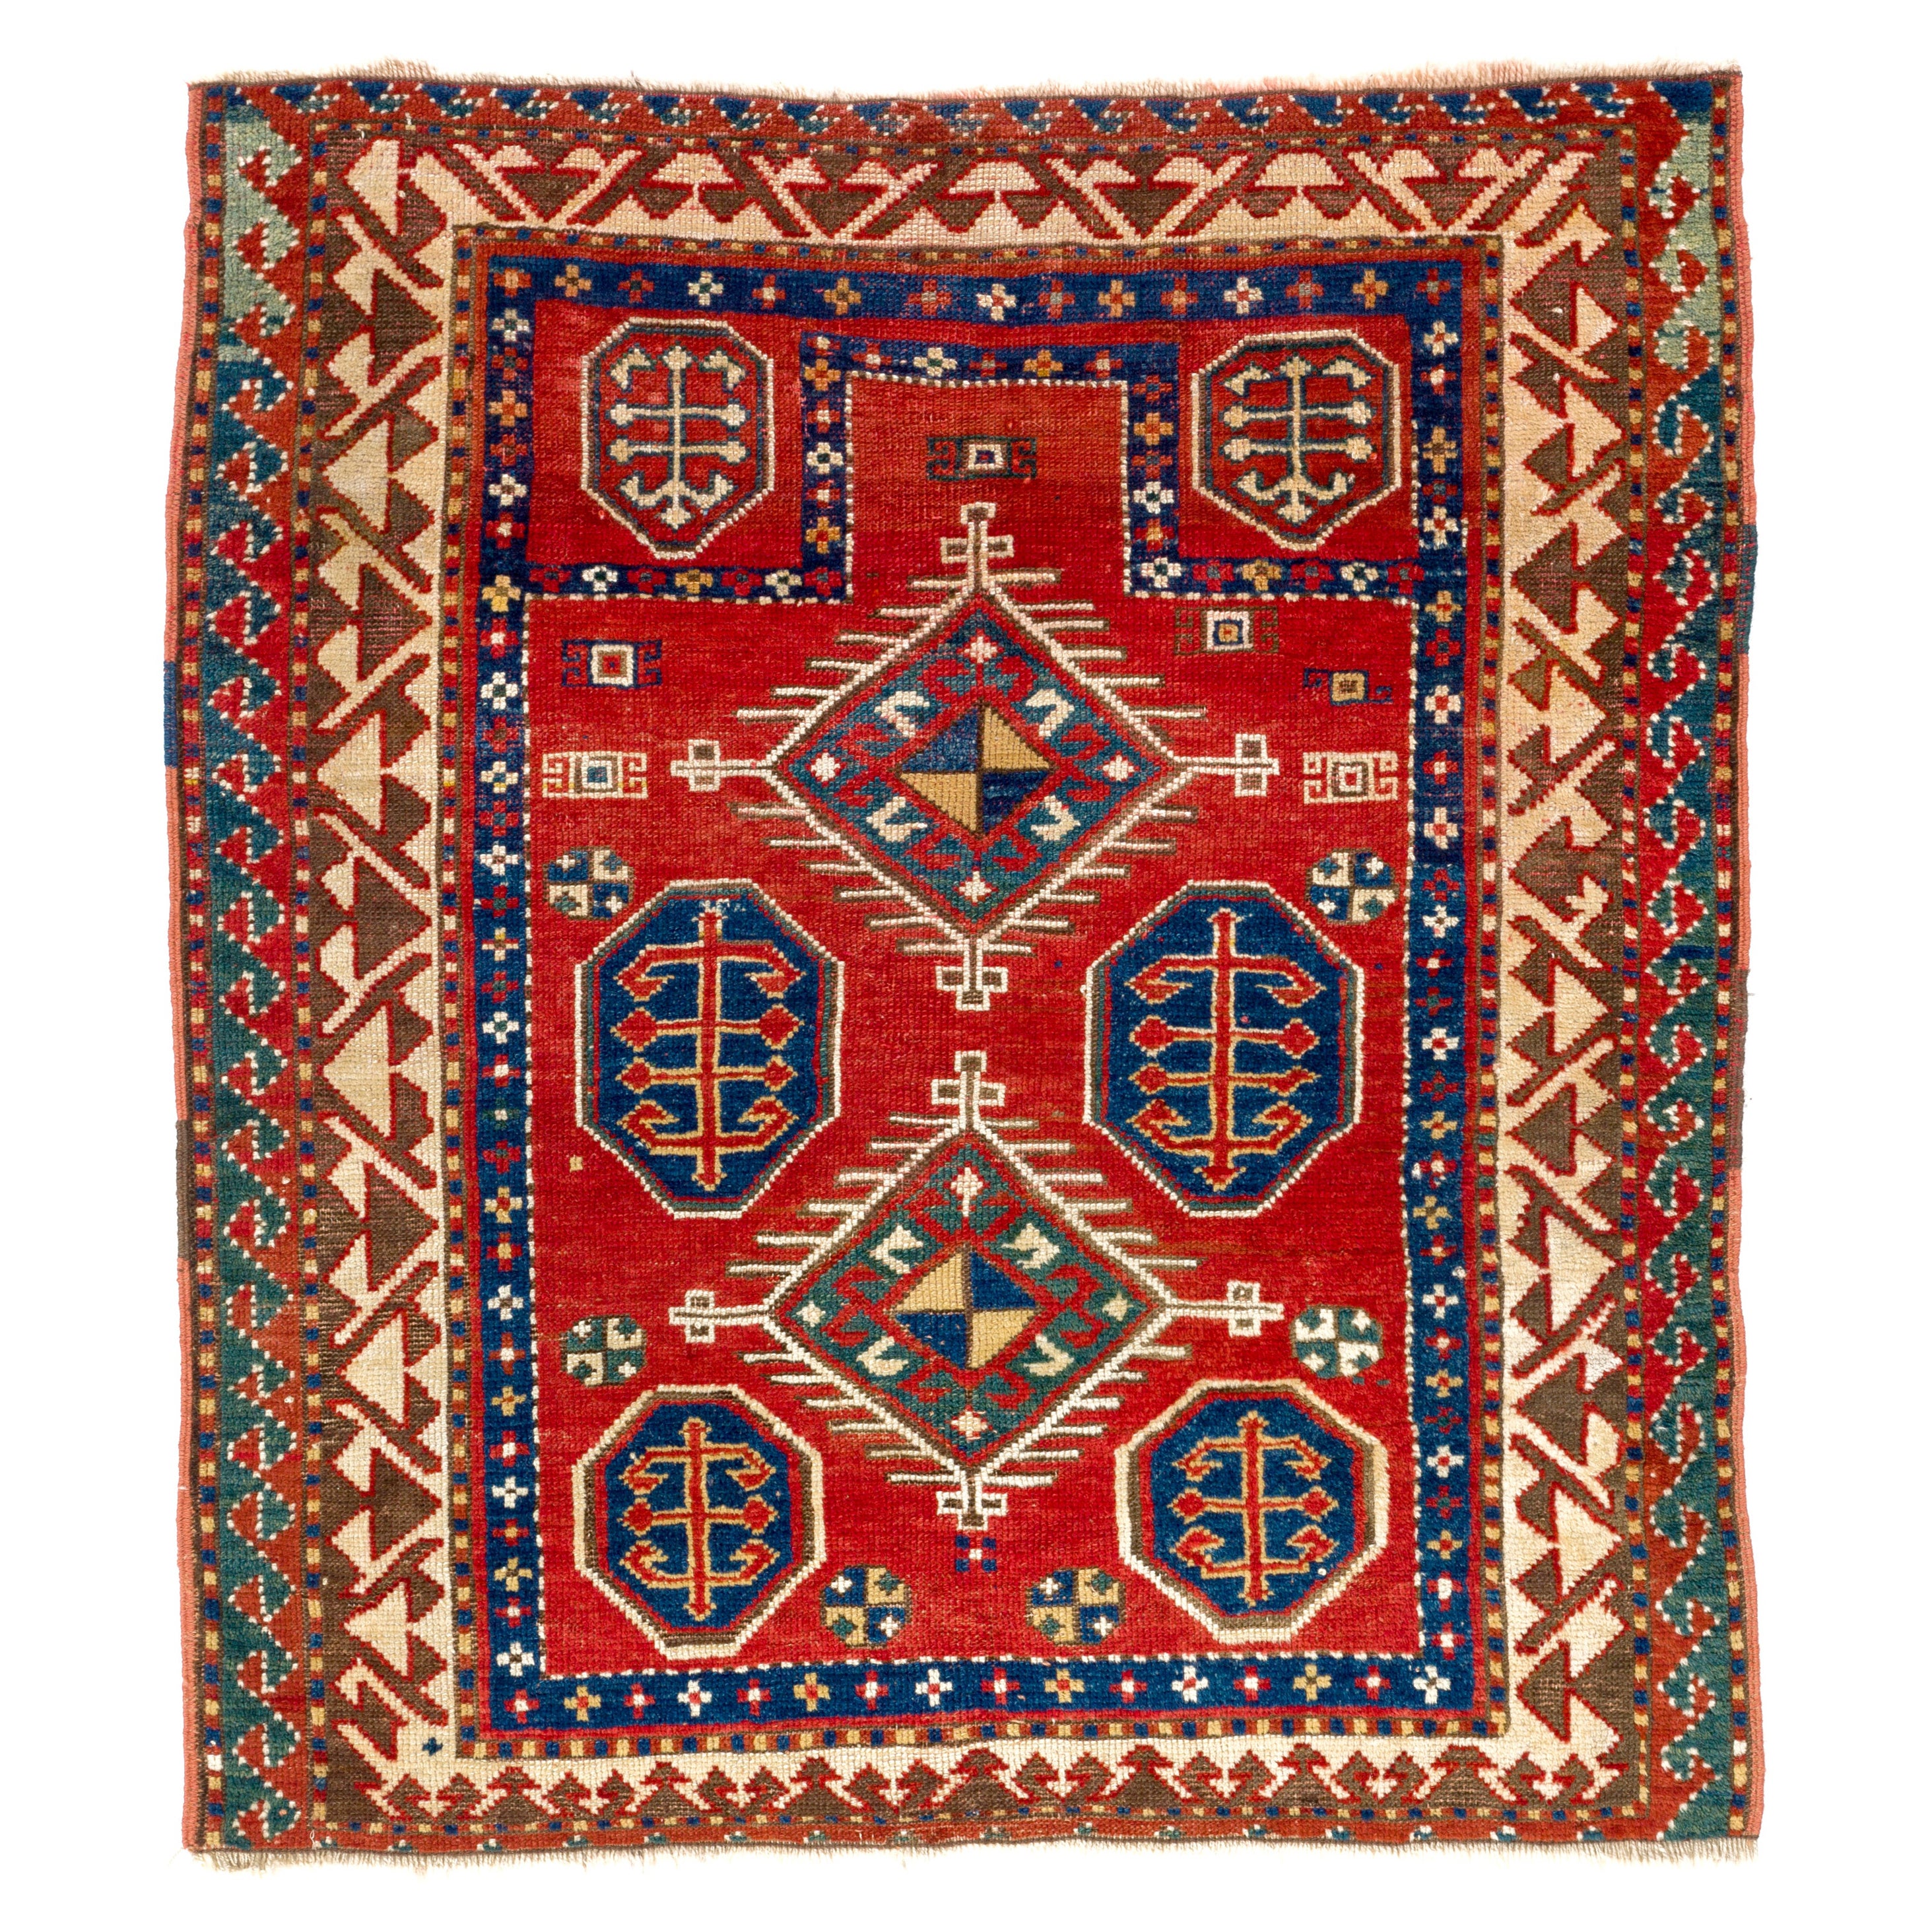 3.5x3.9 Ft Rare Antique Caucasian Borchalo Kazak Prayer Rug, Ca 1875 For Sale